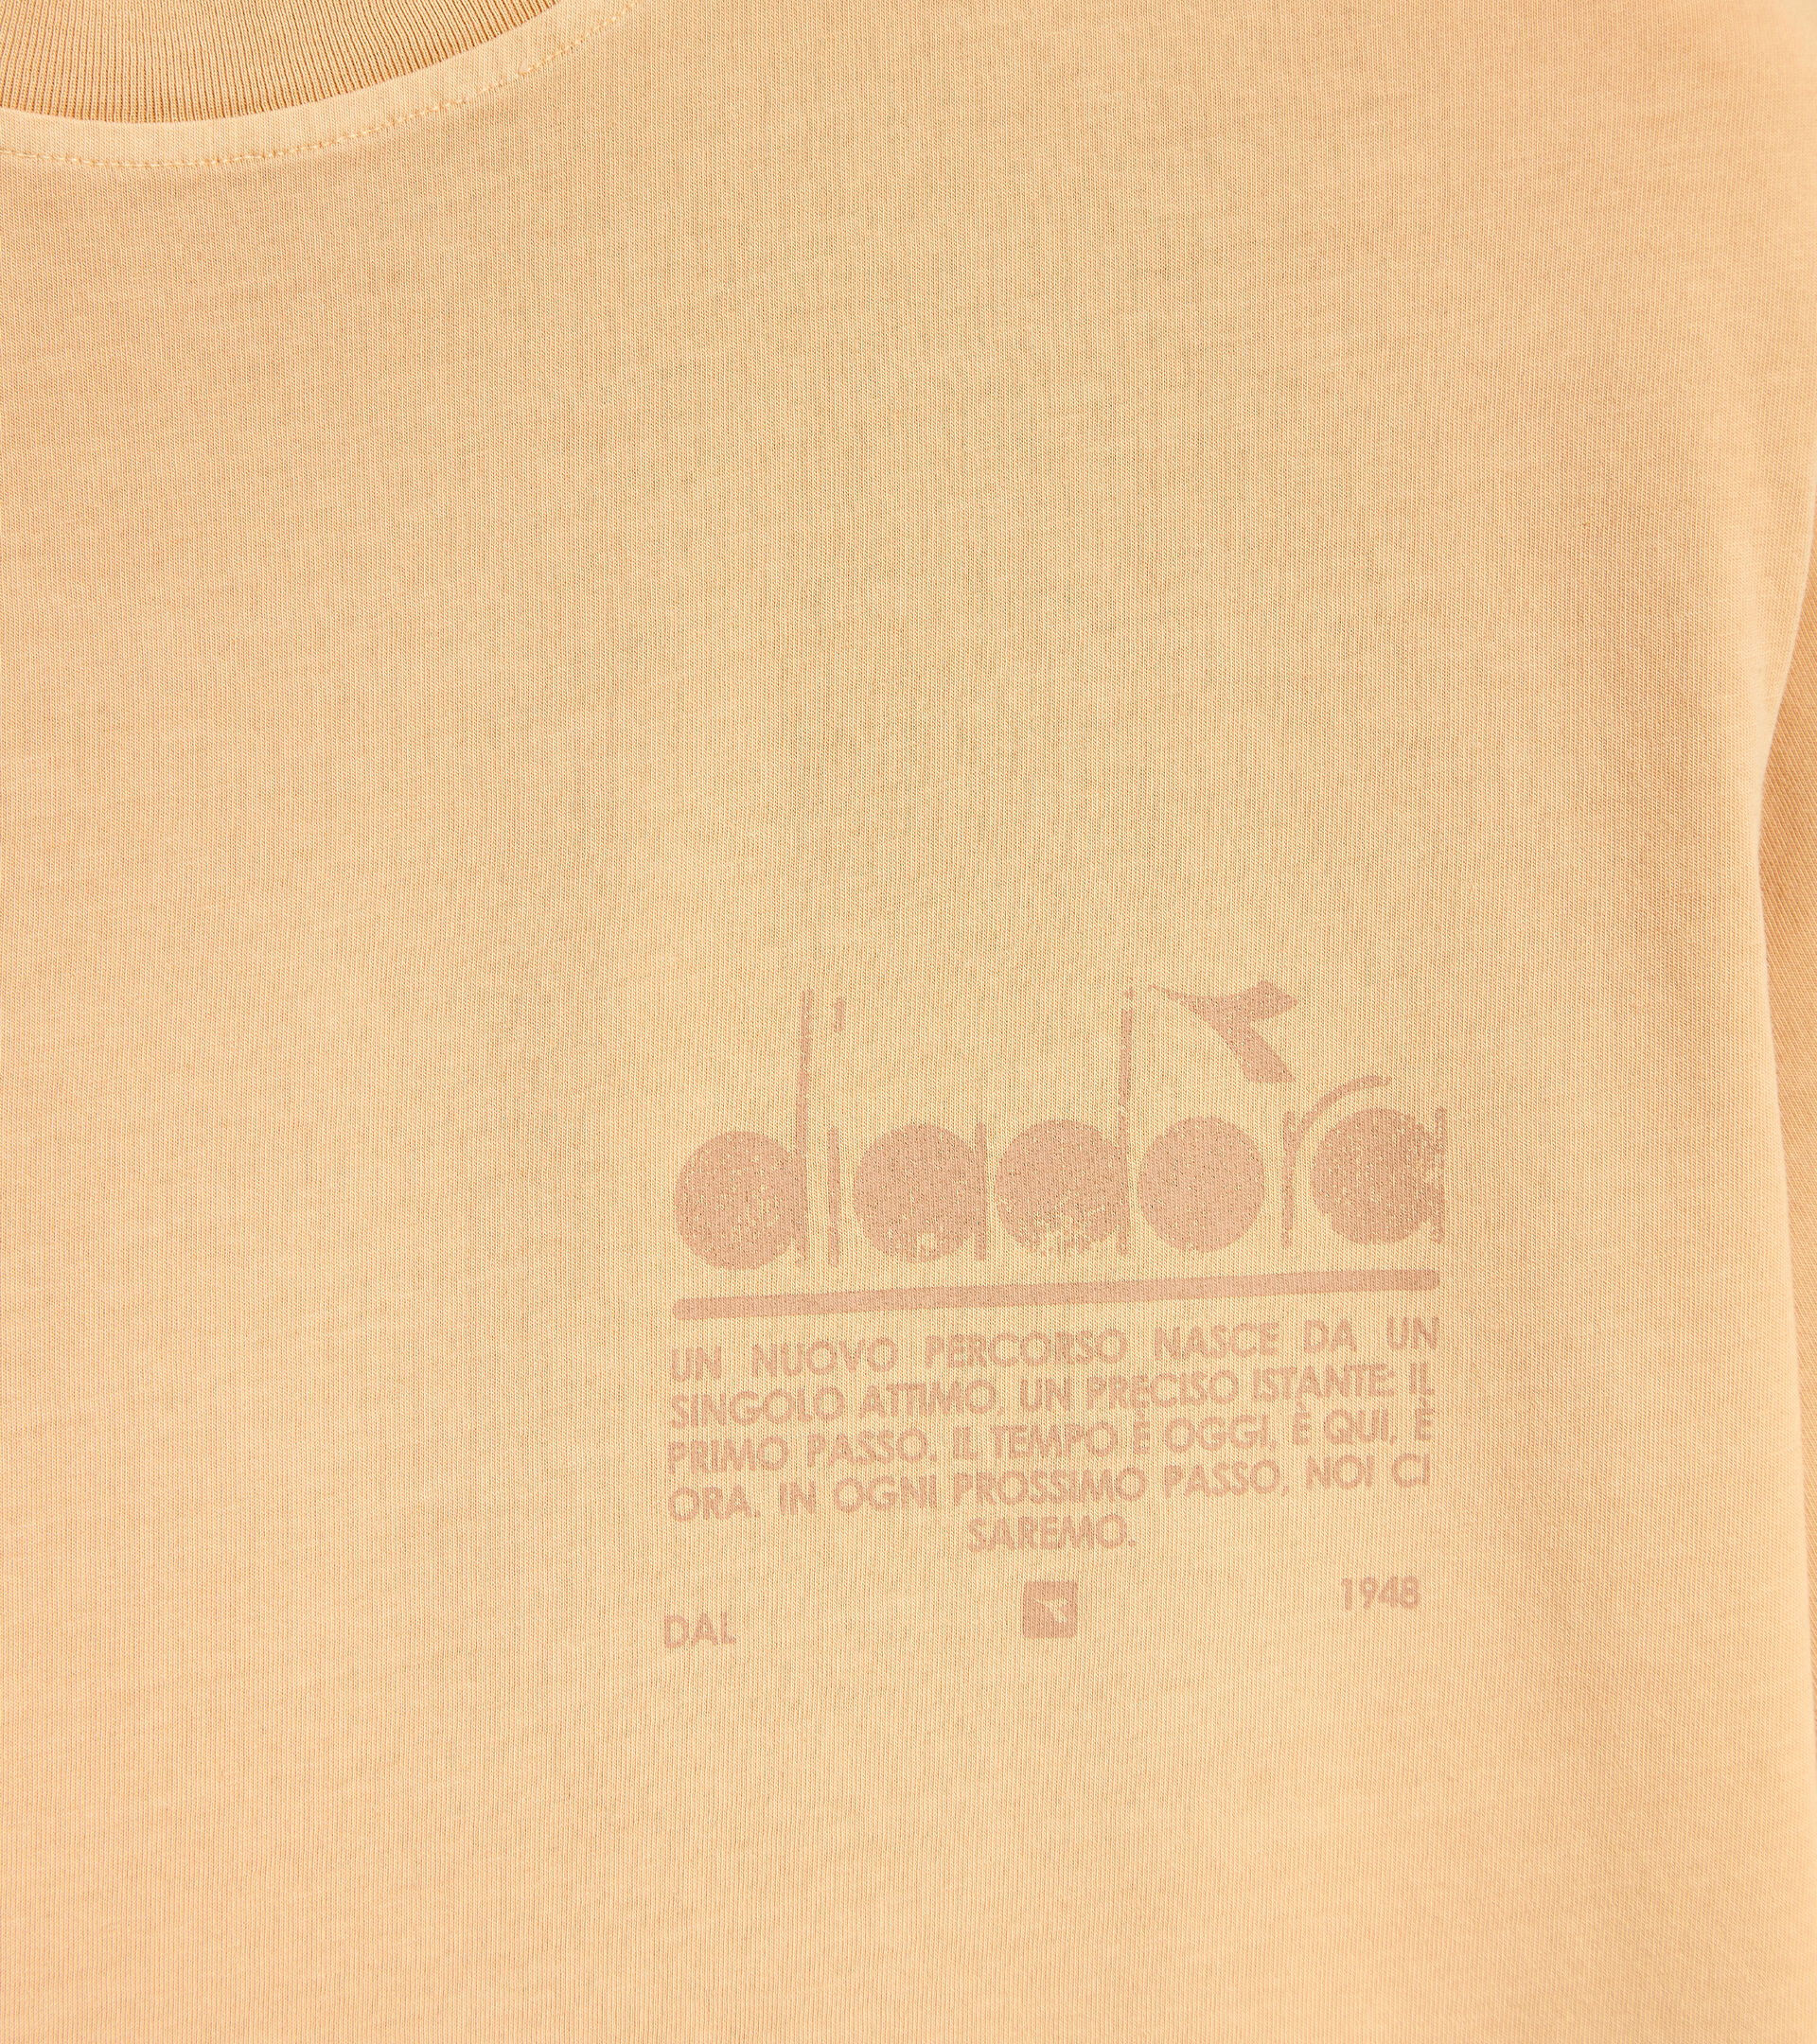 Camiseta de algodón orgánico - Unisex T-SHIRT SS MANIFESTO PALETTE DESERT MIST - Diadora